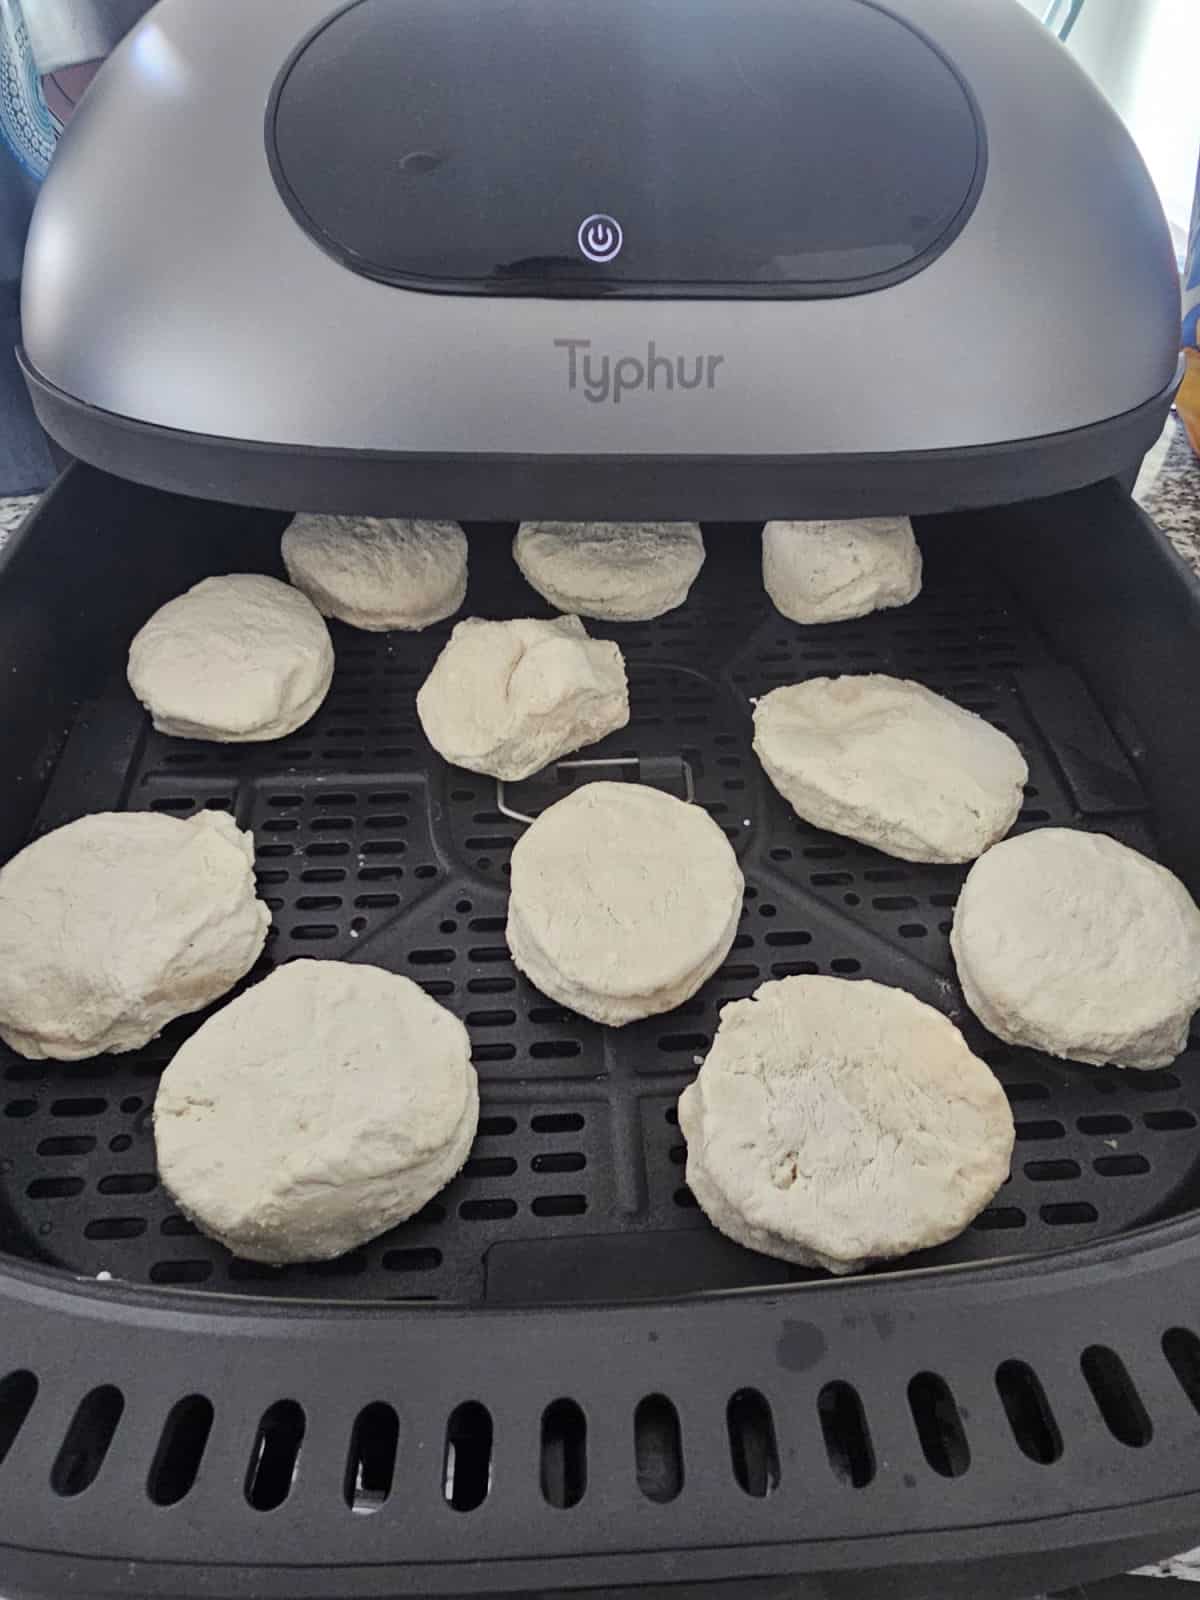 Frozen biscuits in the Typhur Air Fryer